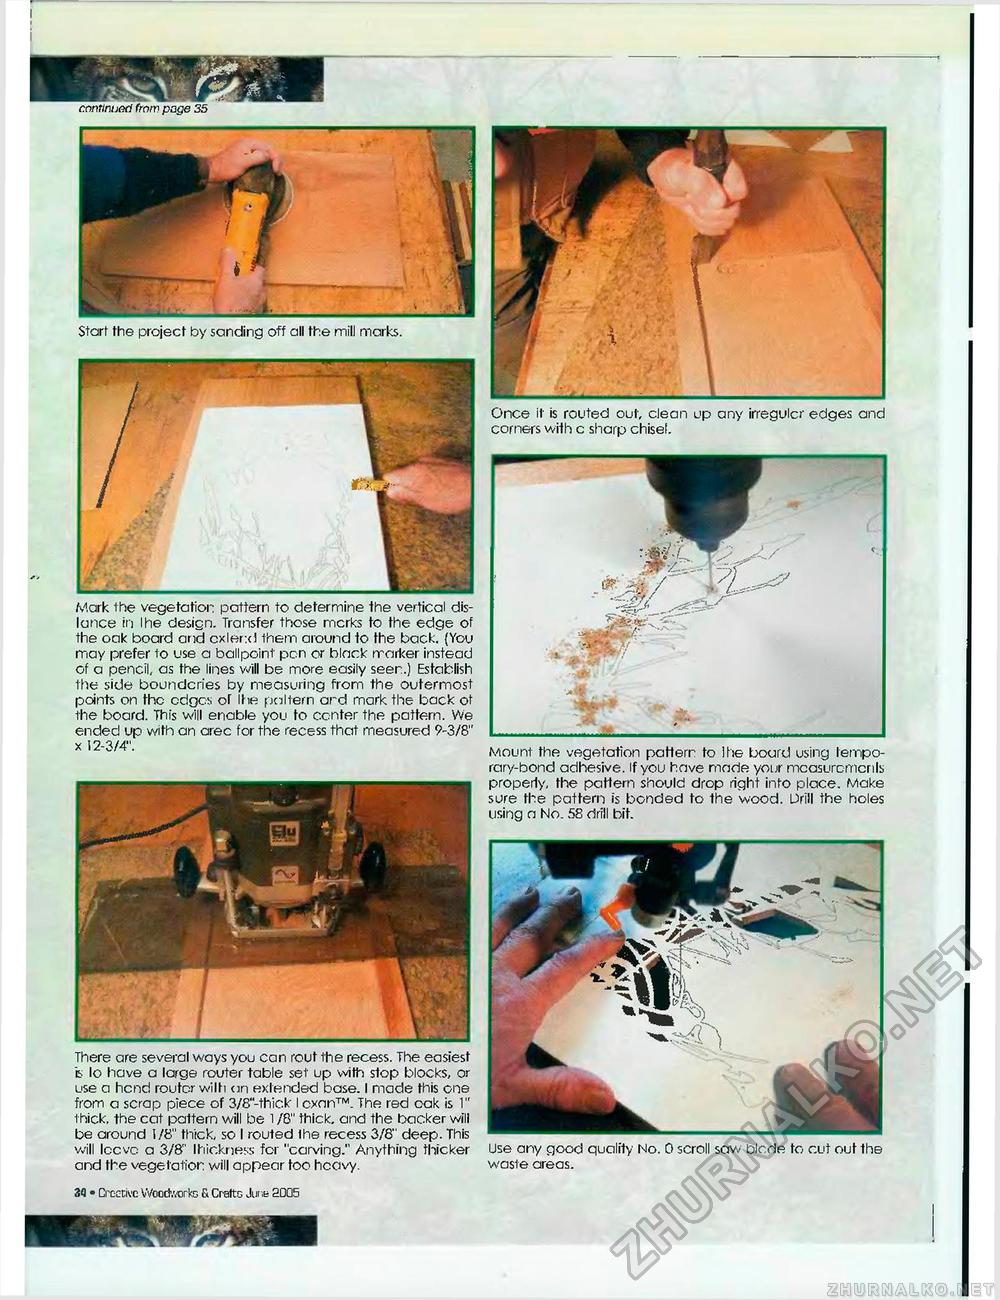 Creative Woodworks & crafts 2005-06,  34